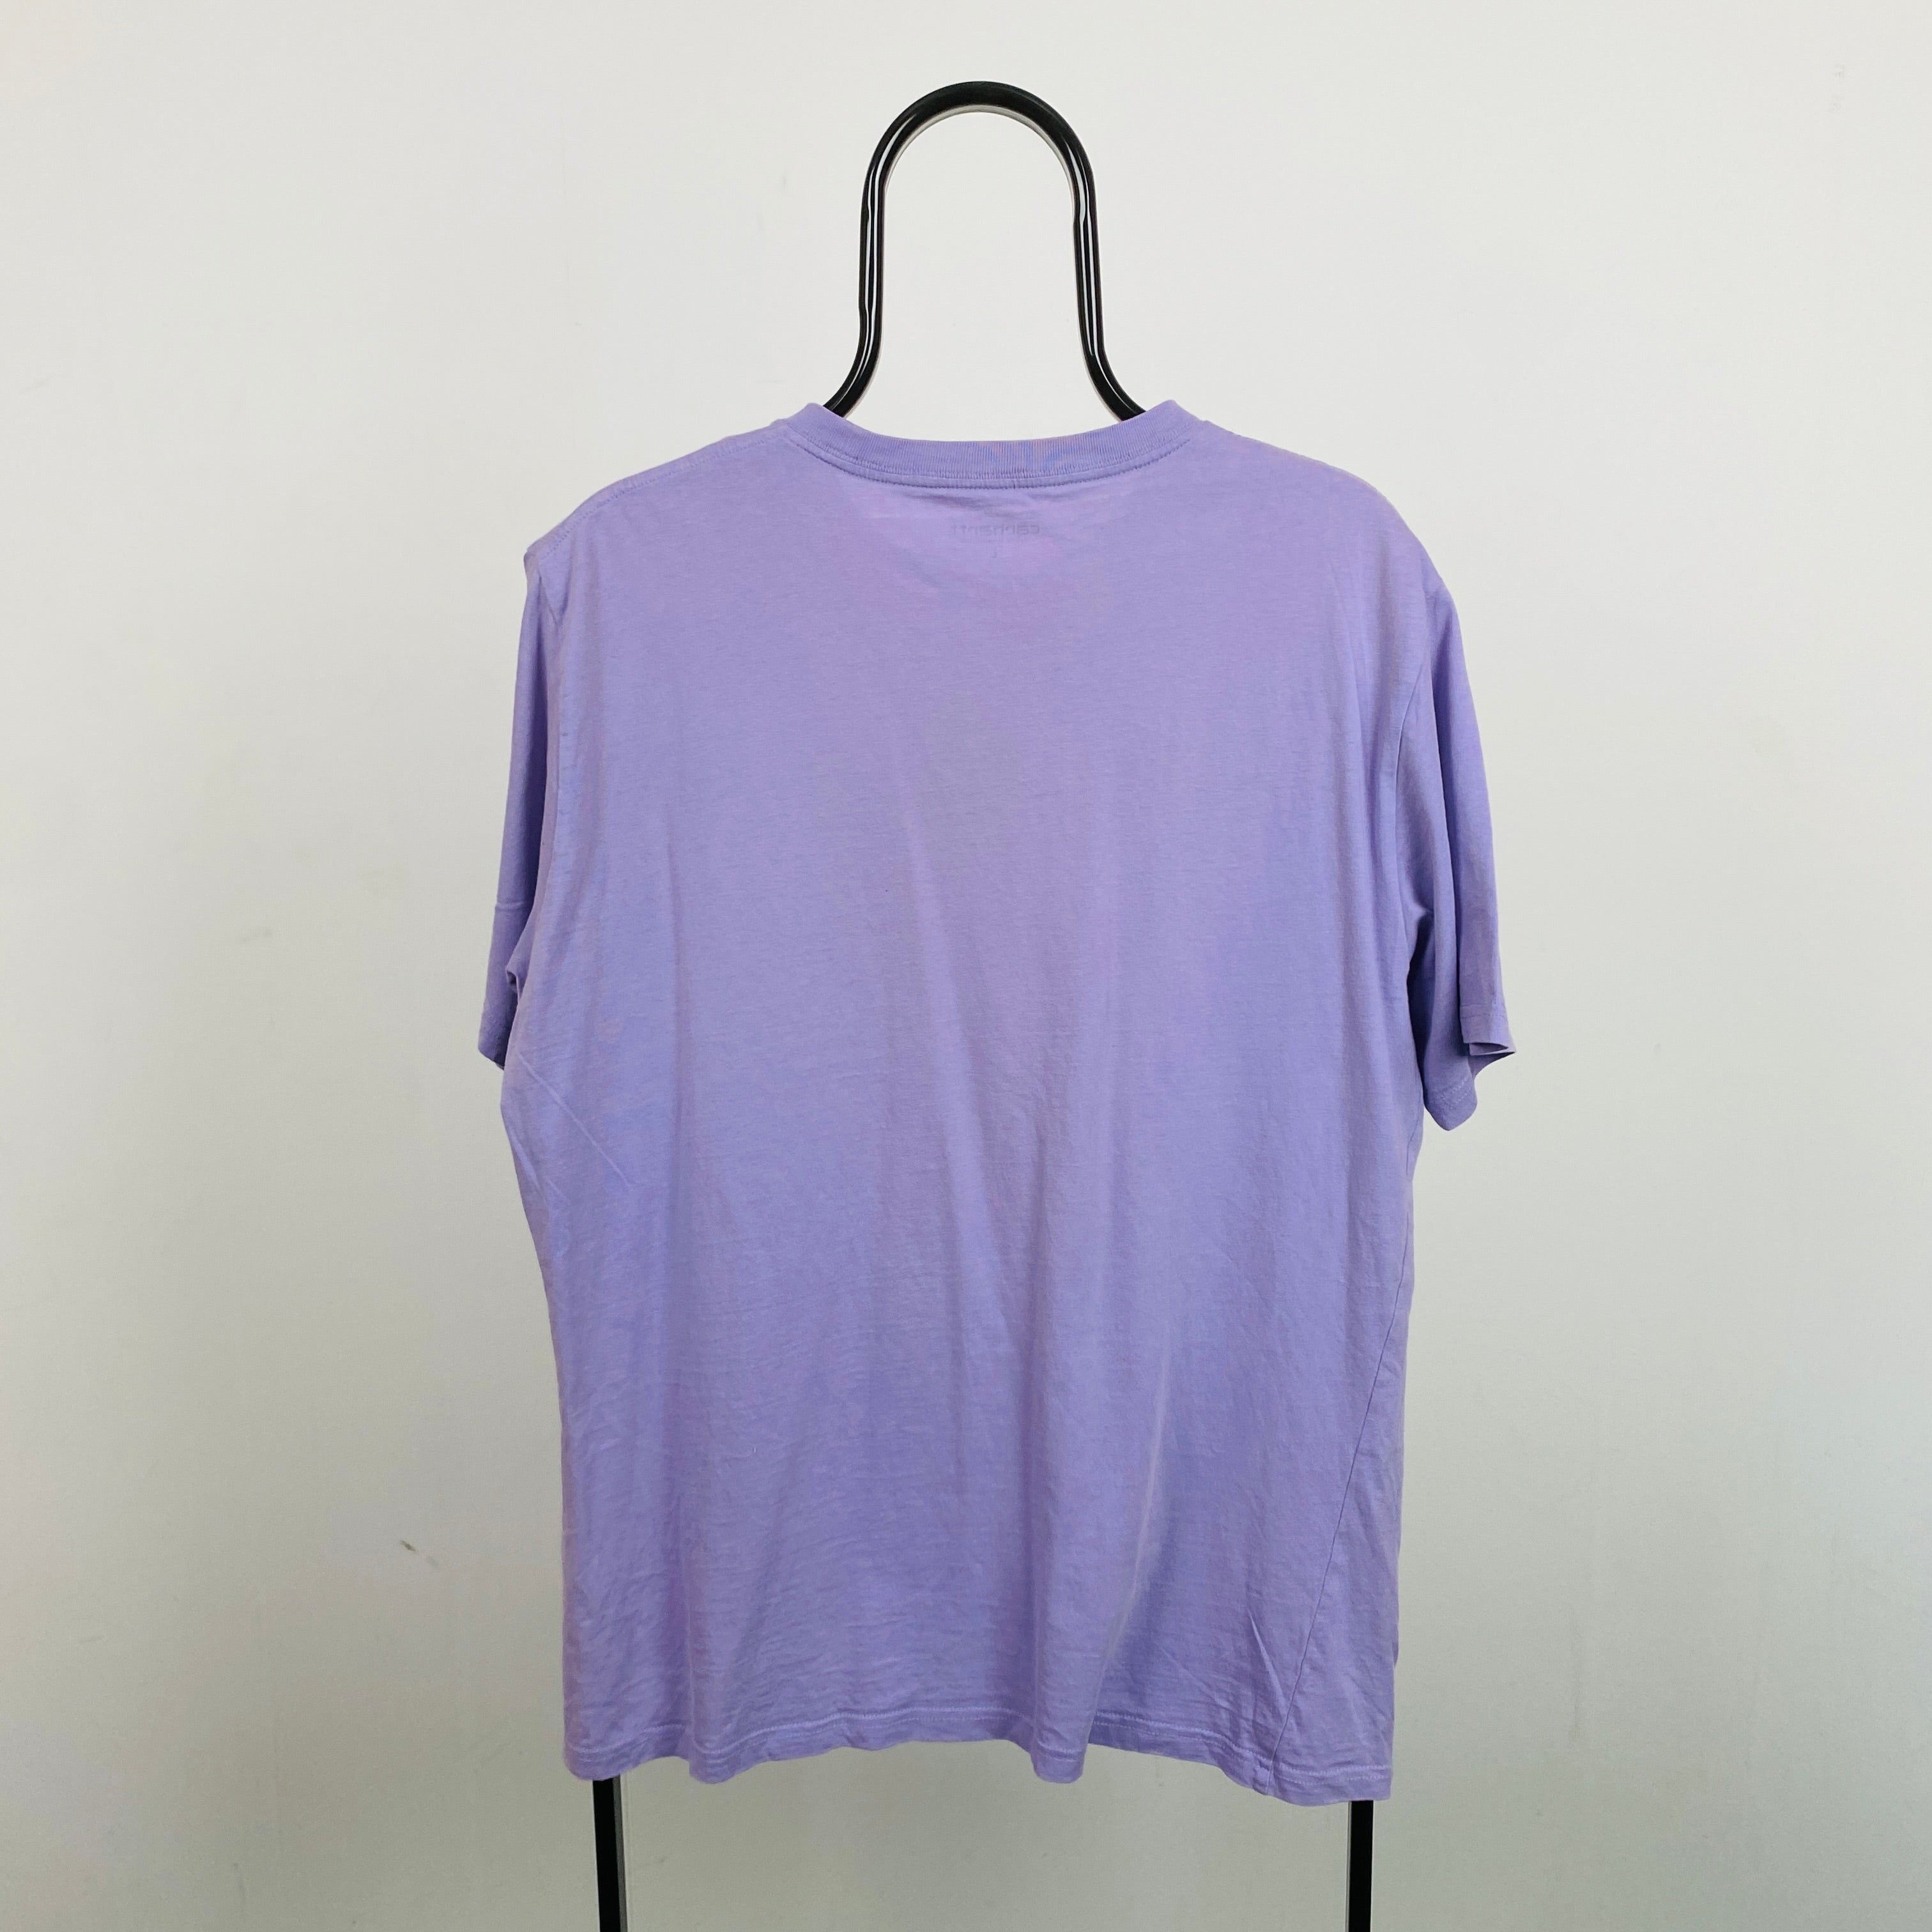 Retro Carhartt Pocket T-Shirt Purple Large